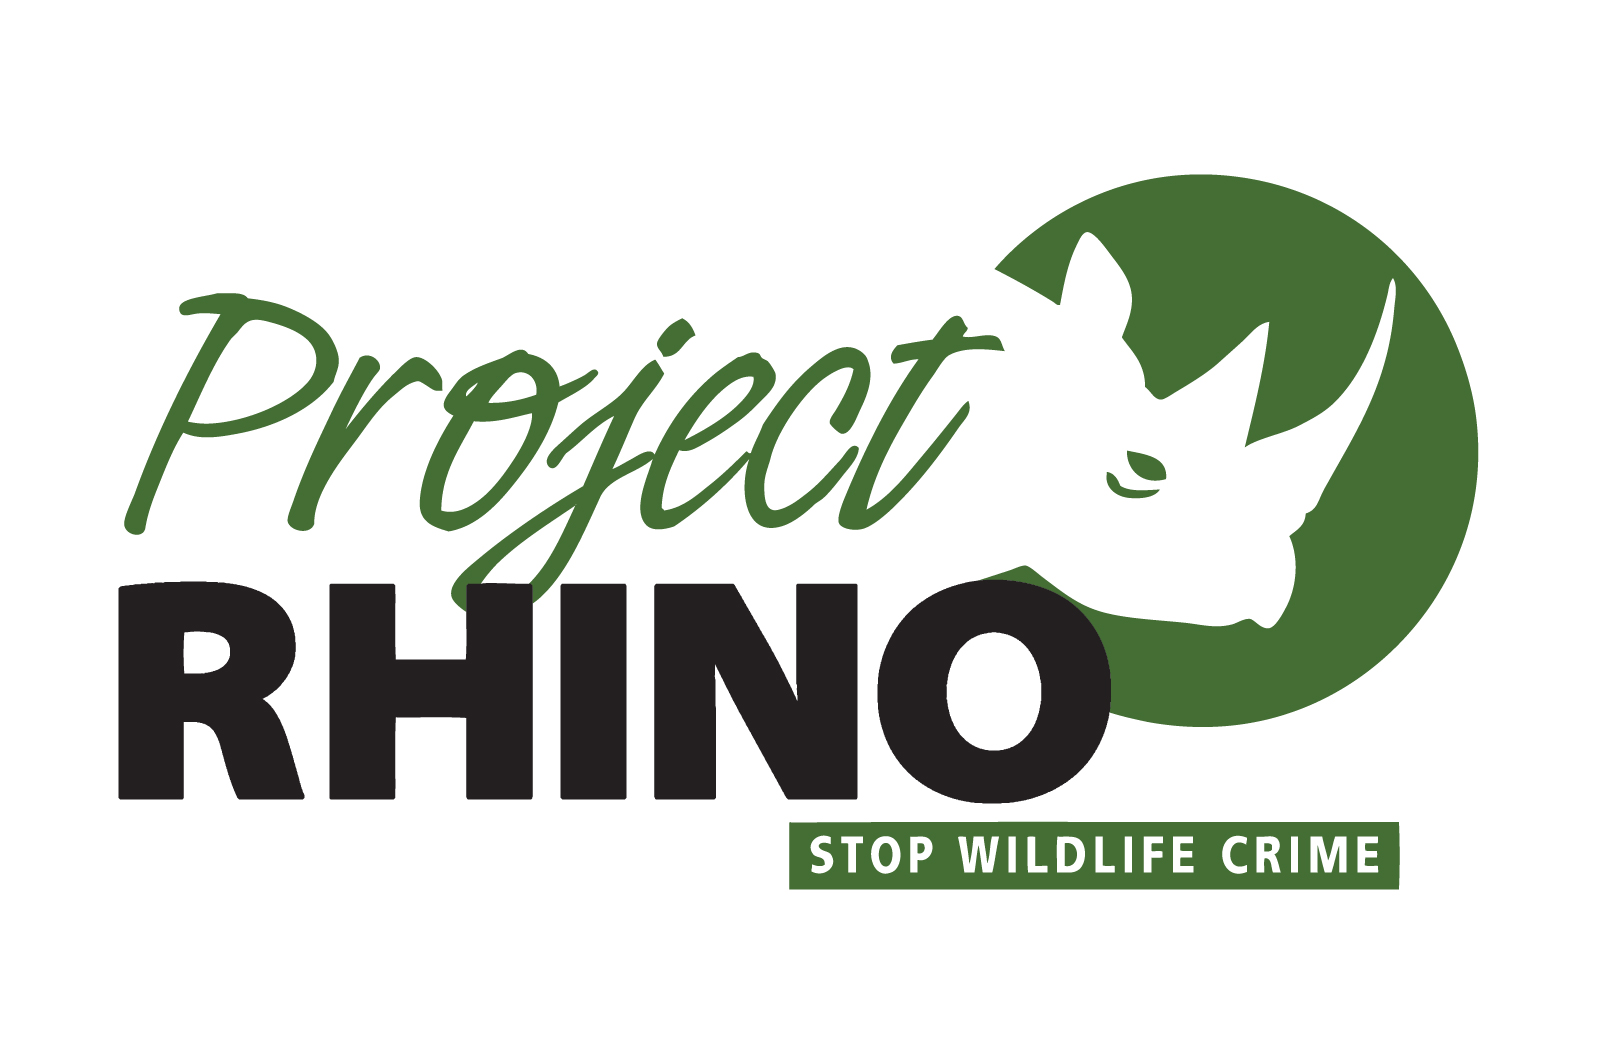 Introducing Project Rhino - the Organization